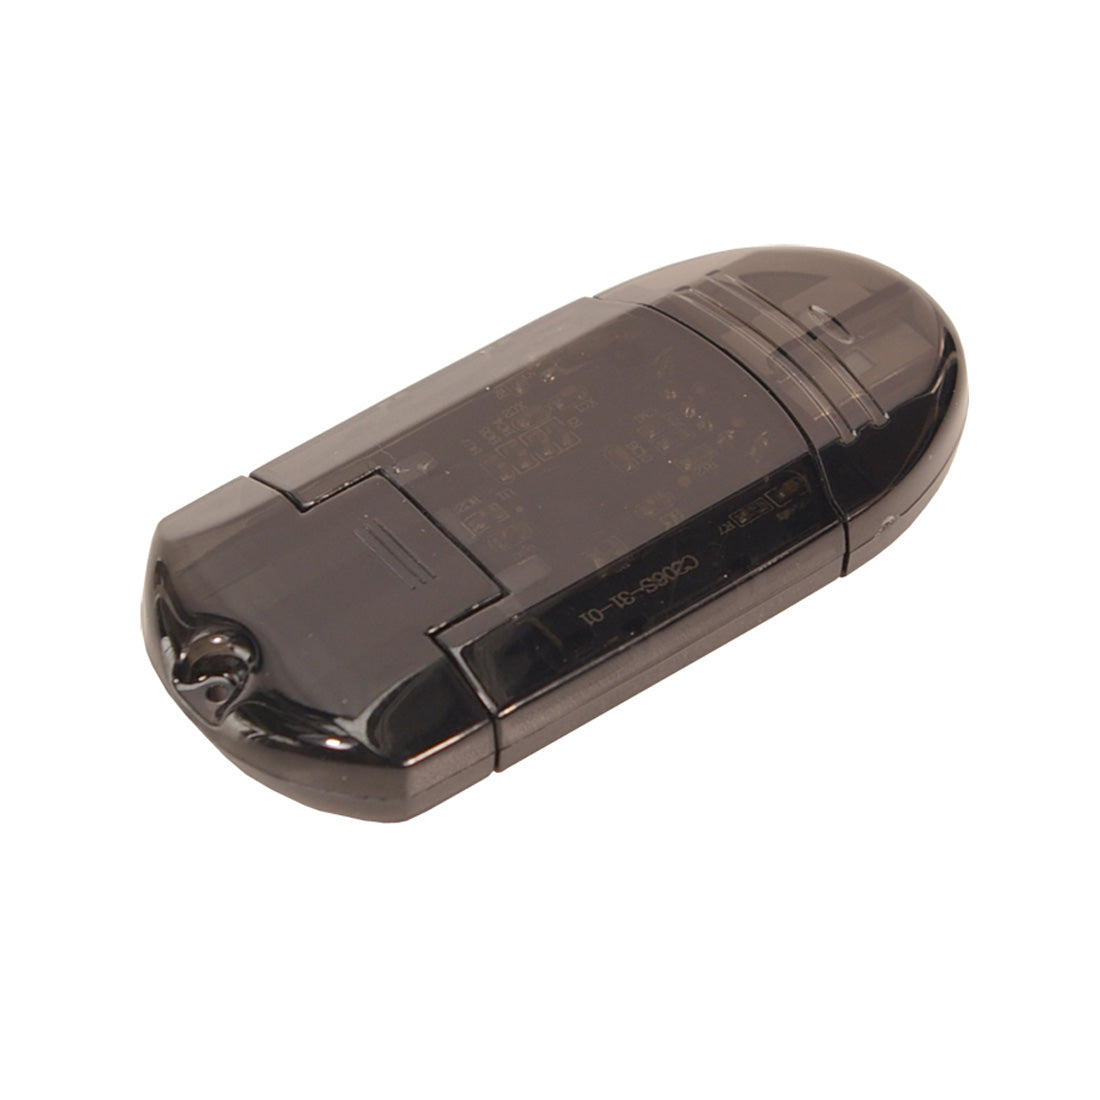 8in1 Kartenleser USB Speicherkartenleser Reiseadapter Micro SDHC MMC Cardreader